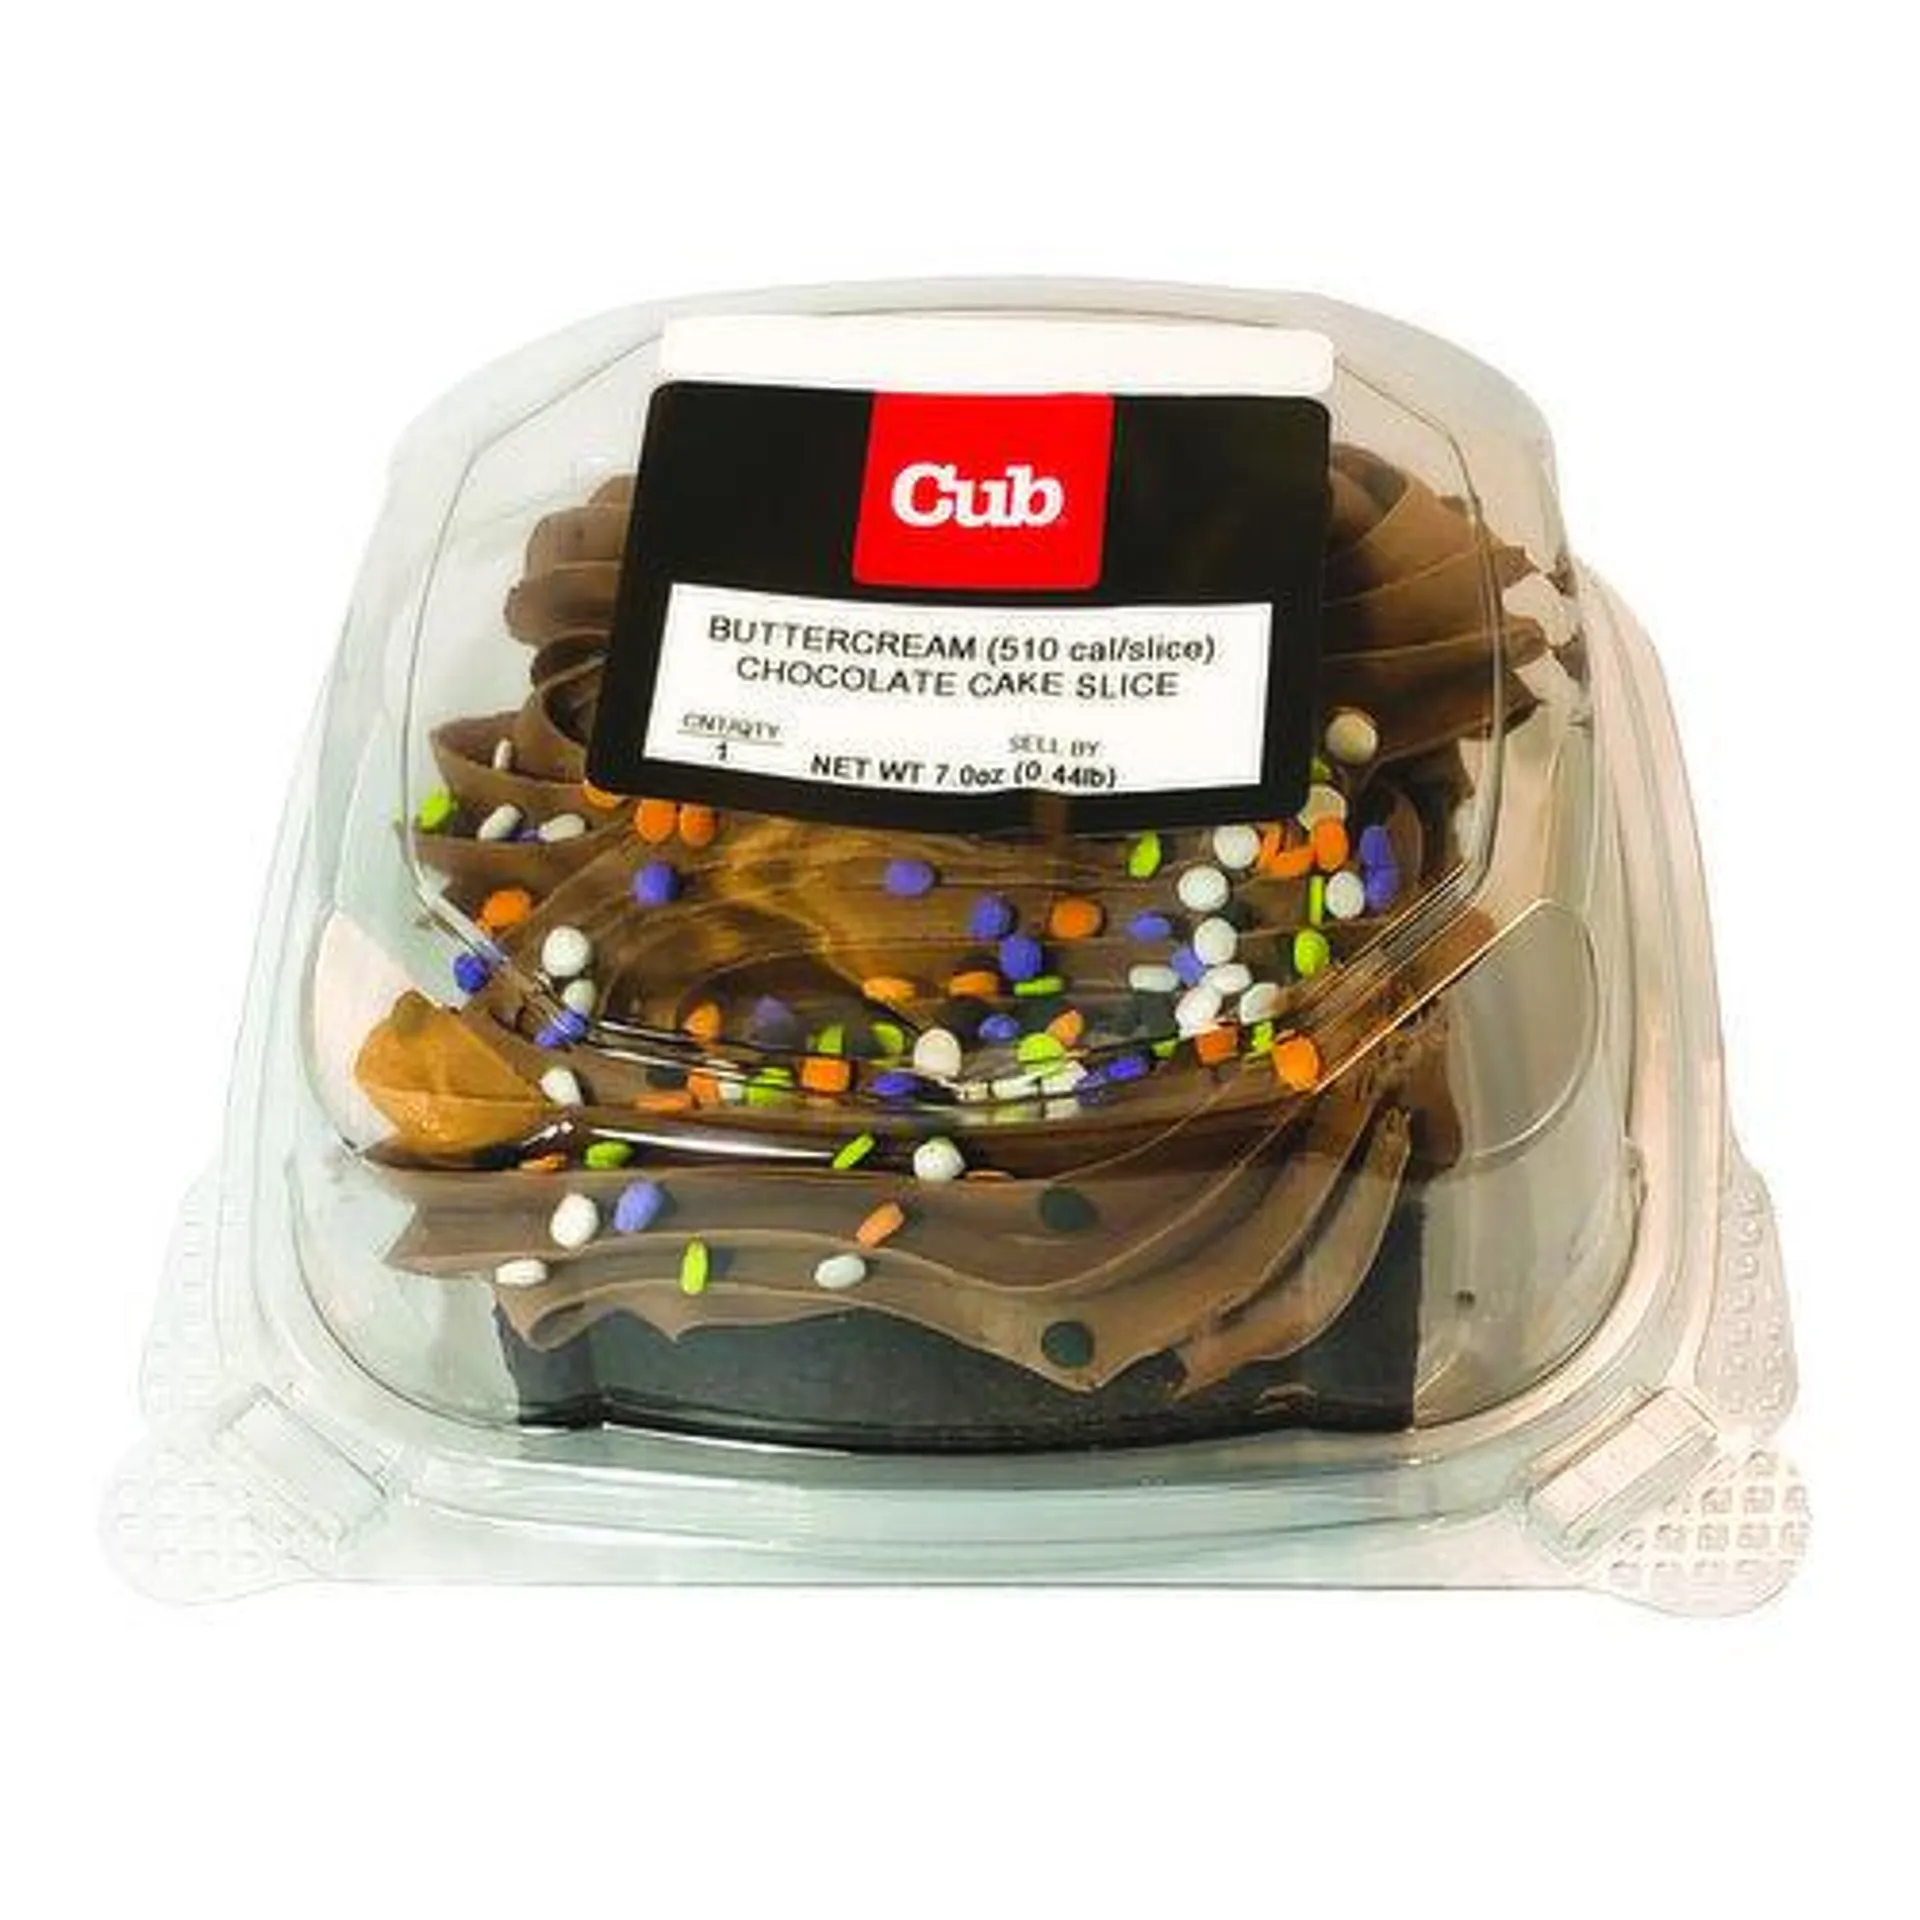 Cub Bakery Chocolate Cake Slice with buttercream, 1 Each